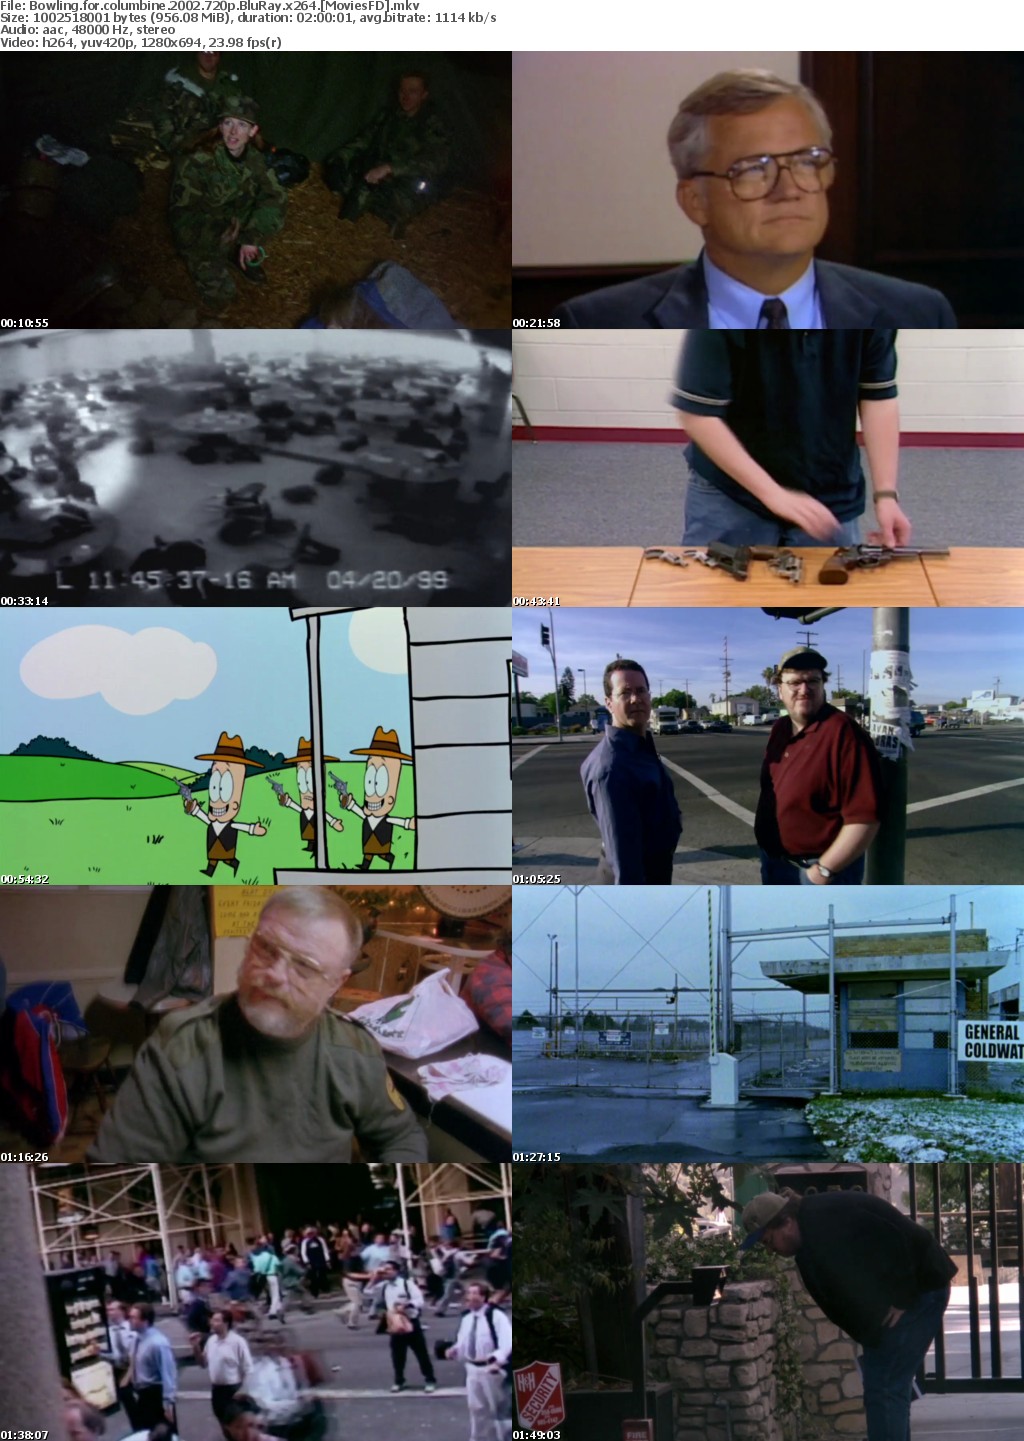 Bowling for Columbine (2002) 720P Bluray X264 Moviesfd